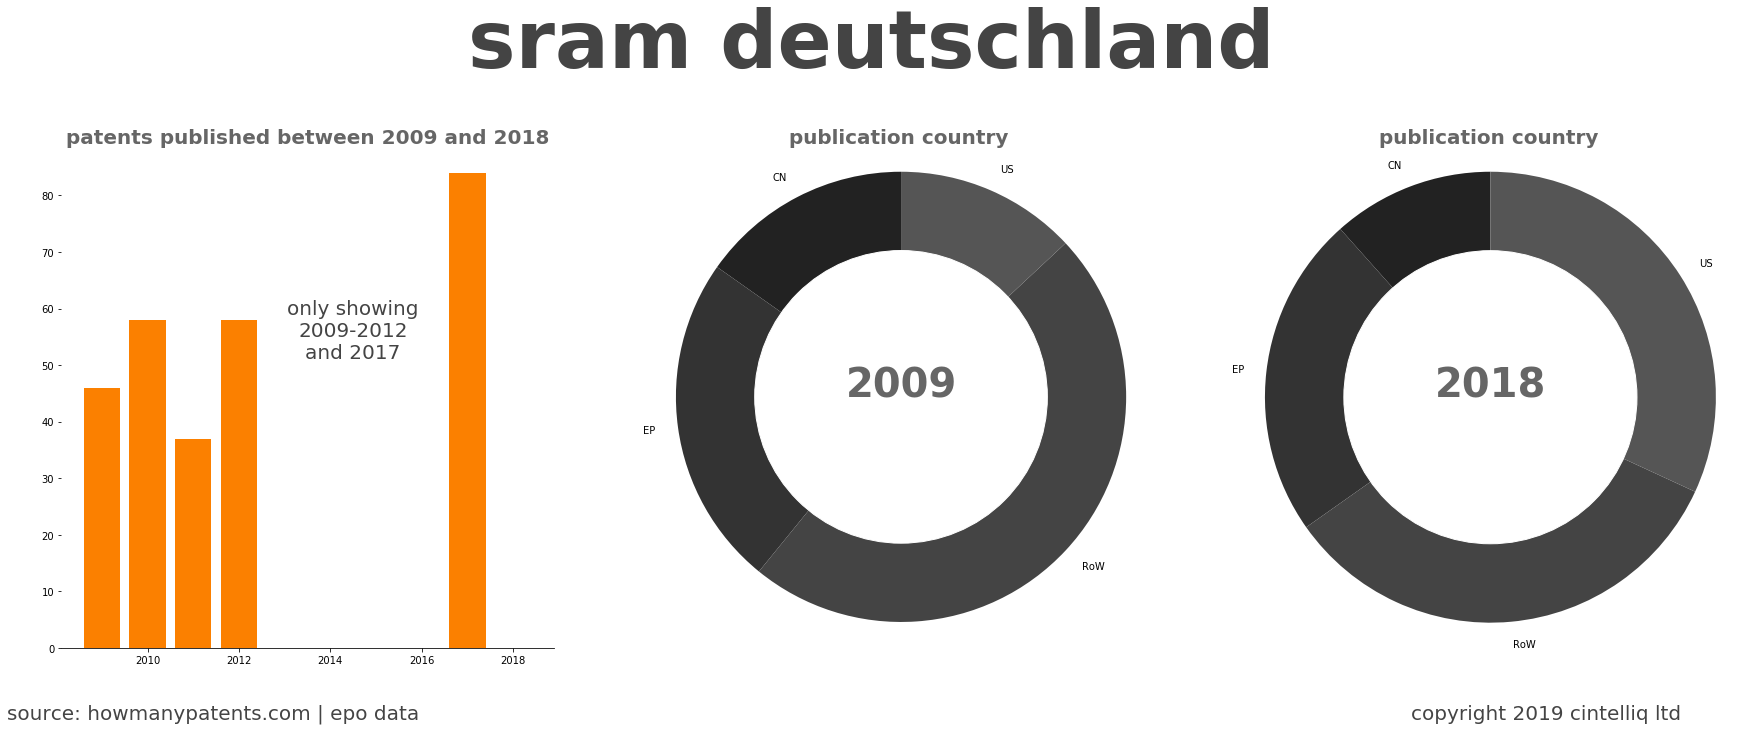 summary of patents for Sram Deutschland